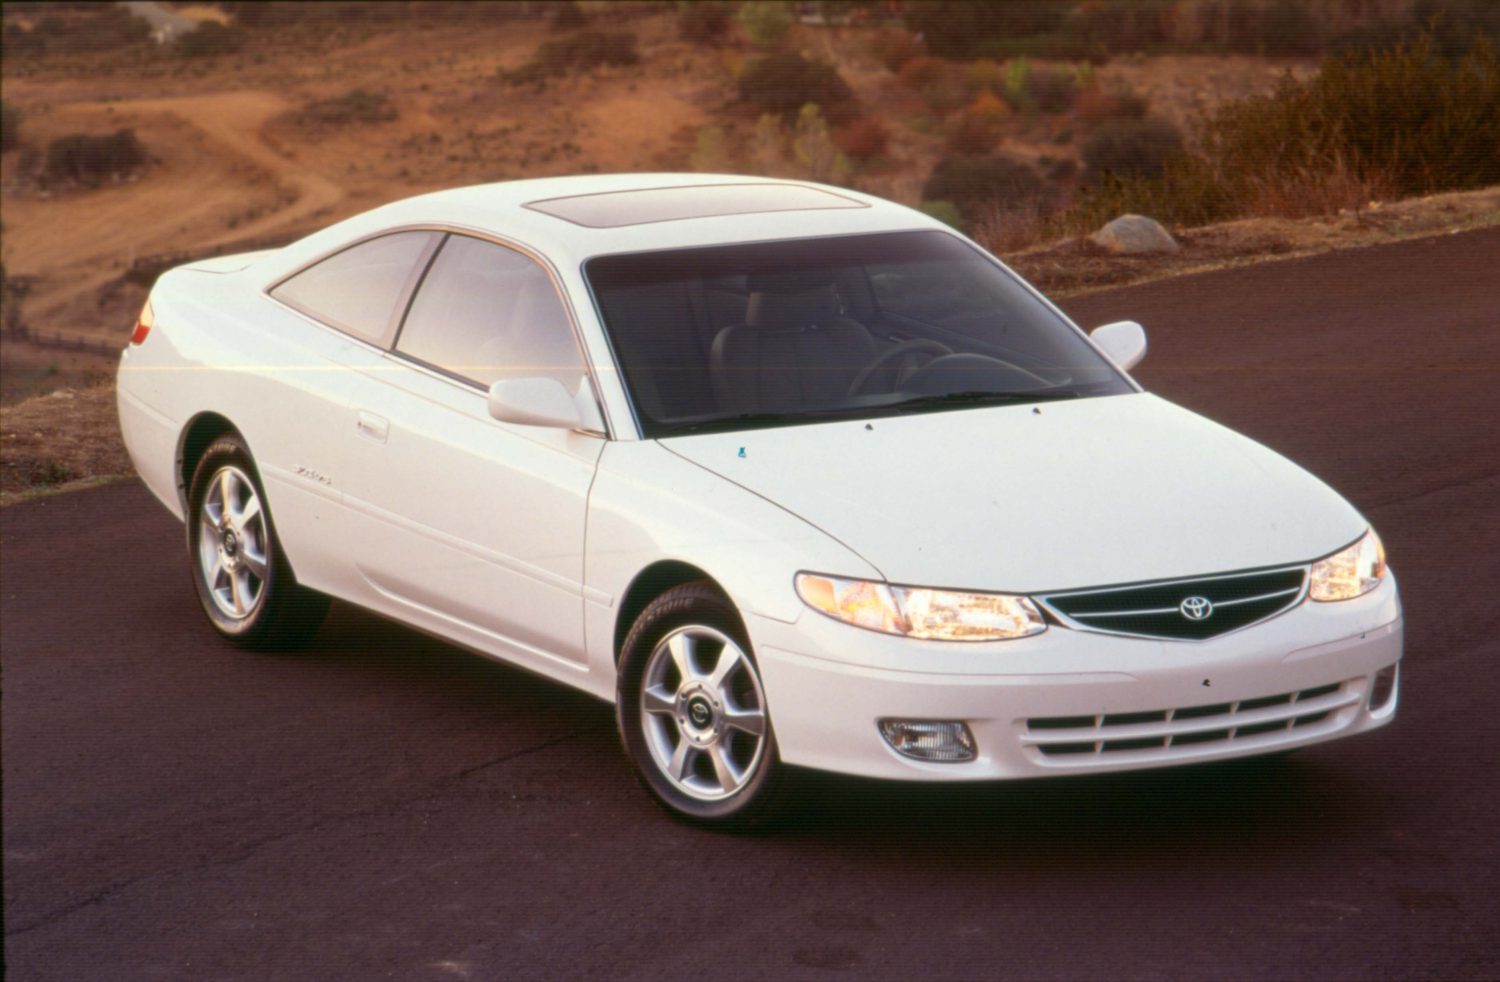 1999 Toyota Camry Solara Coupe - Toyota USA Newsroom